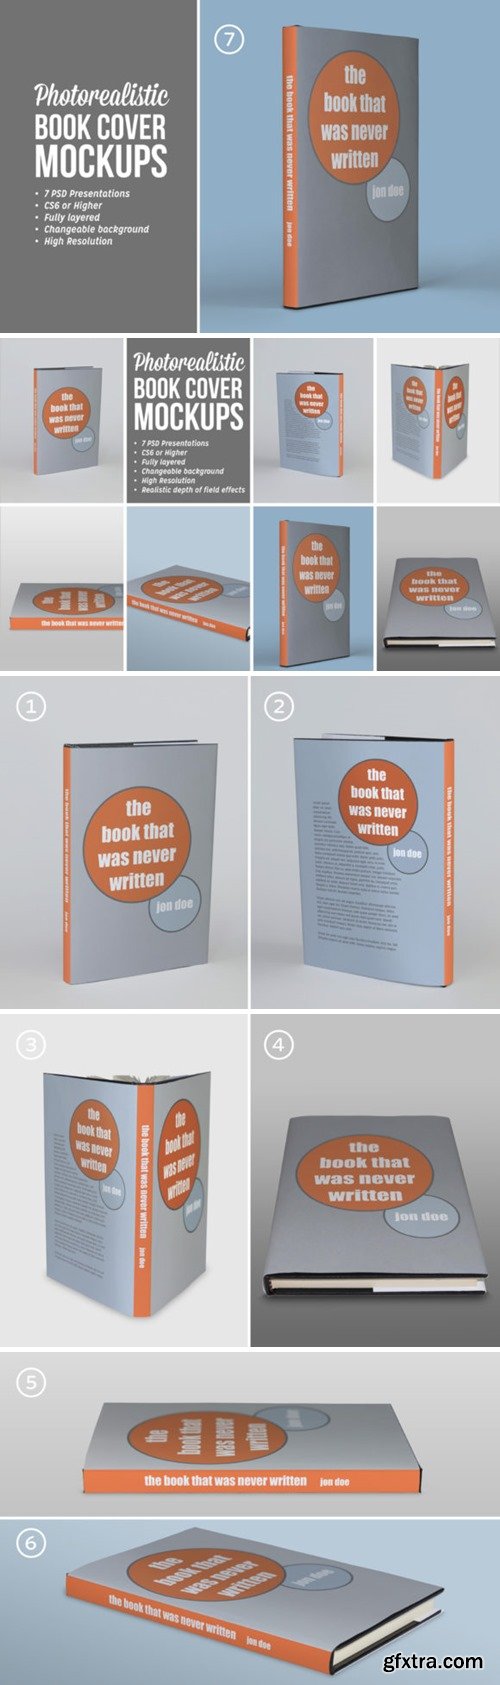 Photorealistic Book Covers Mockups 3682539